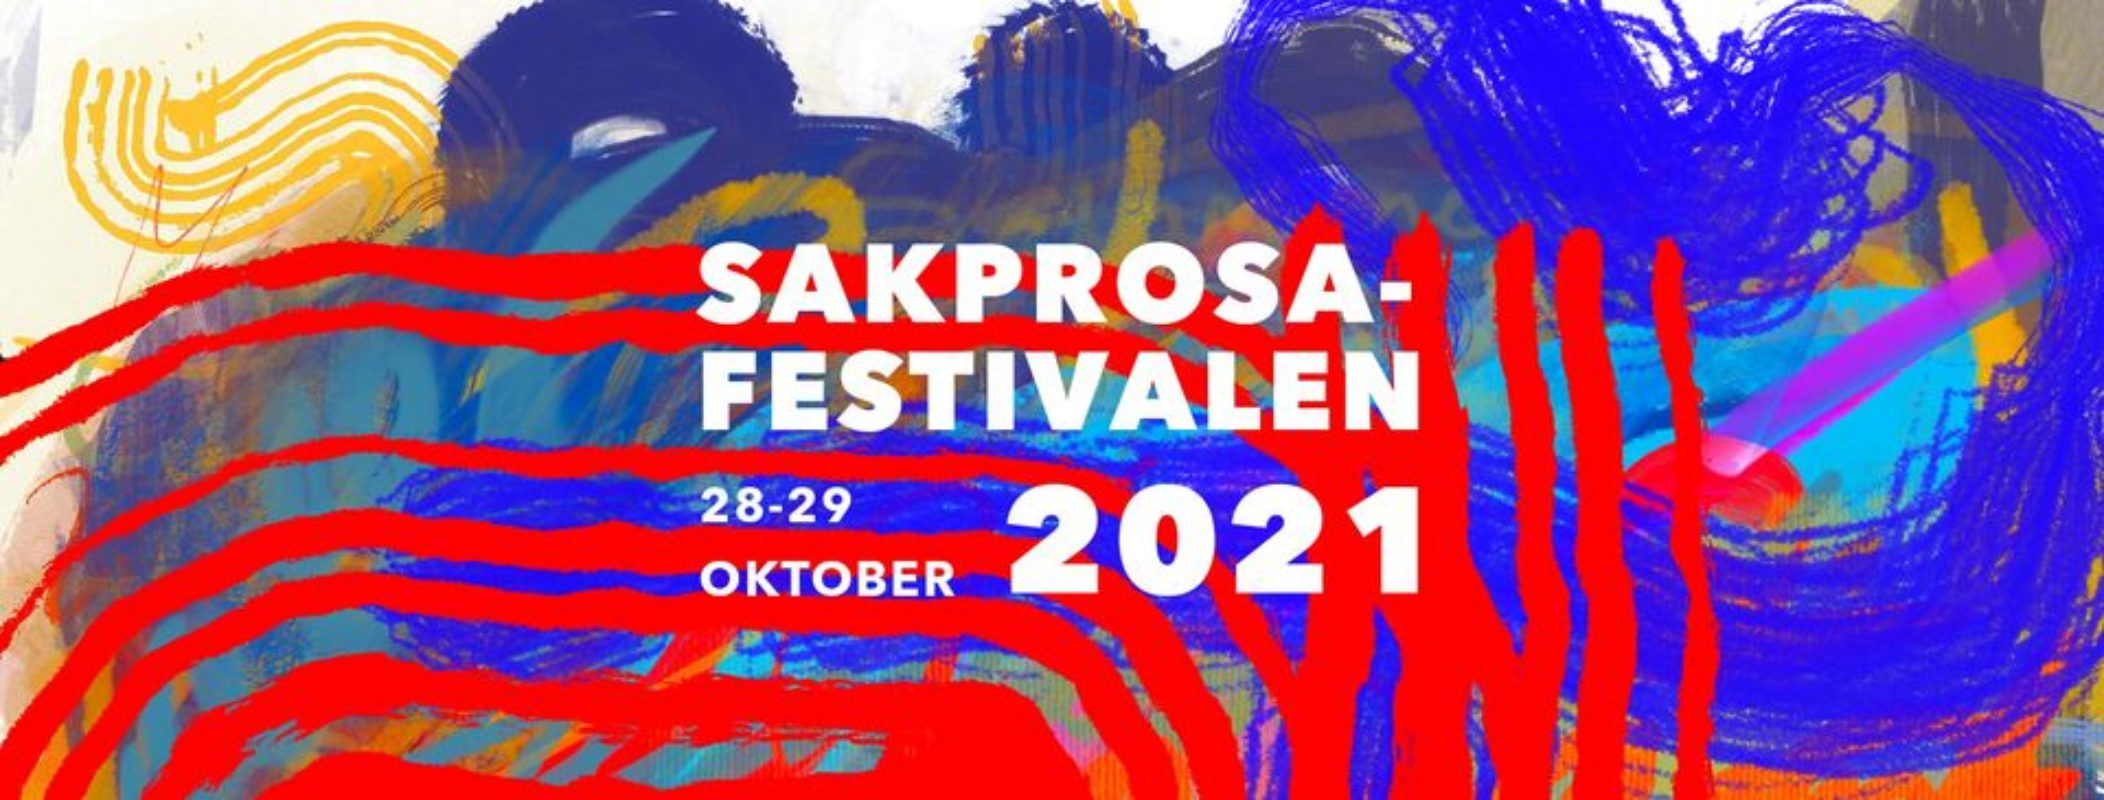 Sakprosafestivalen